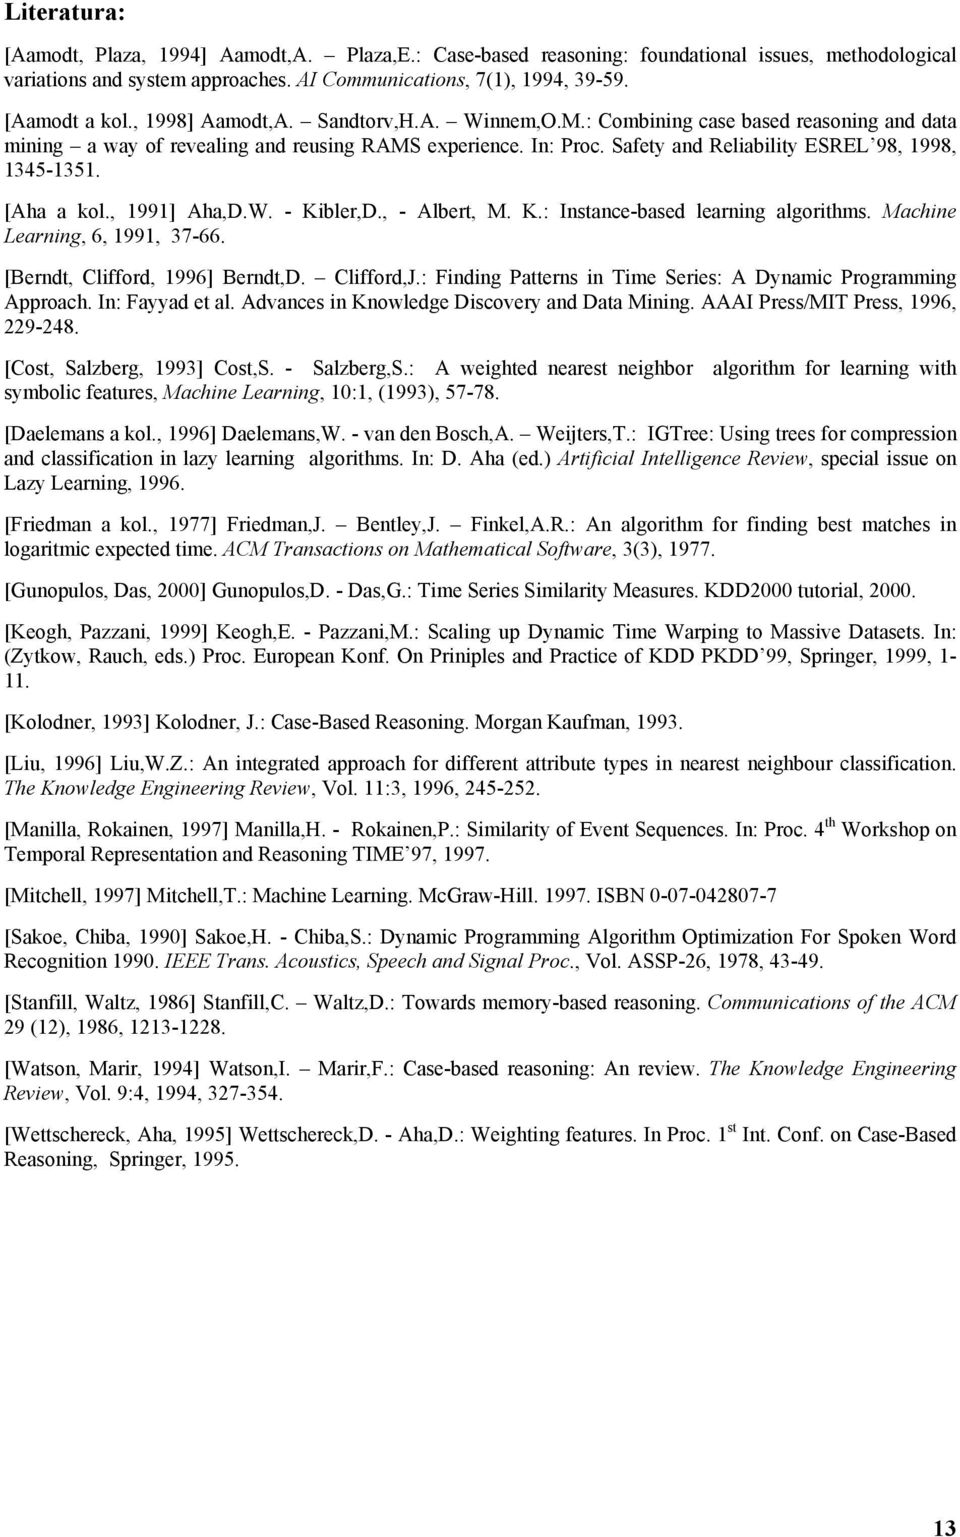 [Aha a kol., 1991] Aha,D.W. - Kibler,D., - Albert, M. K.: Instance-based learning algorithms. Machine Learning, 6, 1991, 37-66. [Berndt, Clifford, 1996] Berndt,D. Clifford,J.